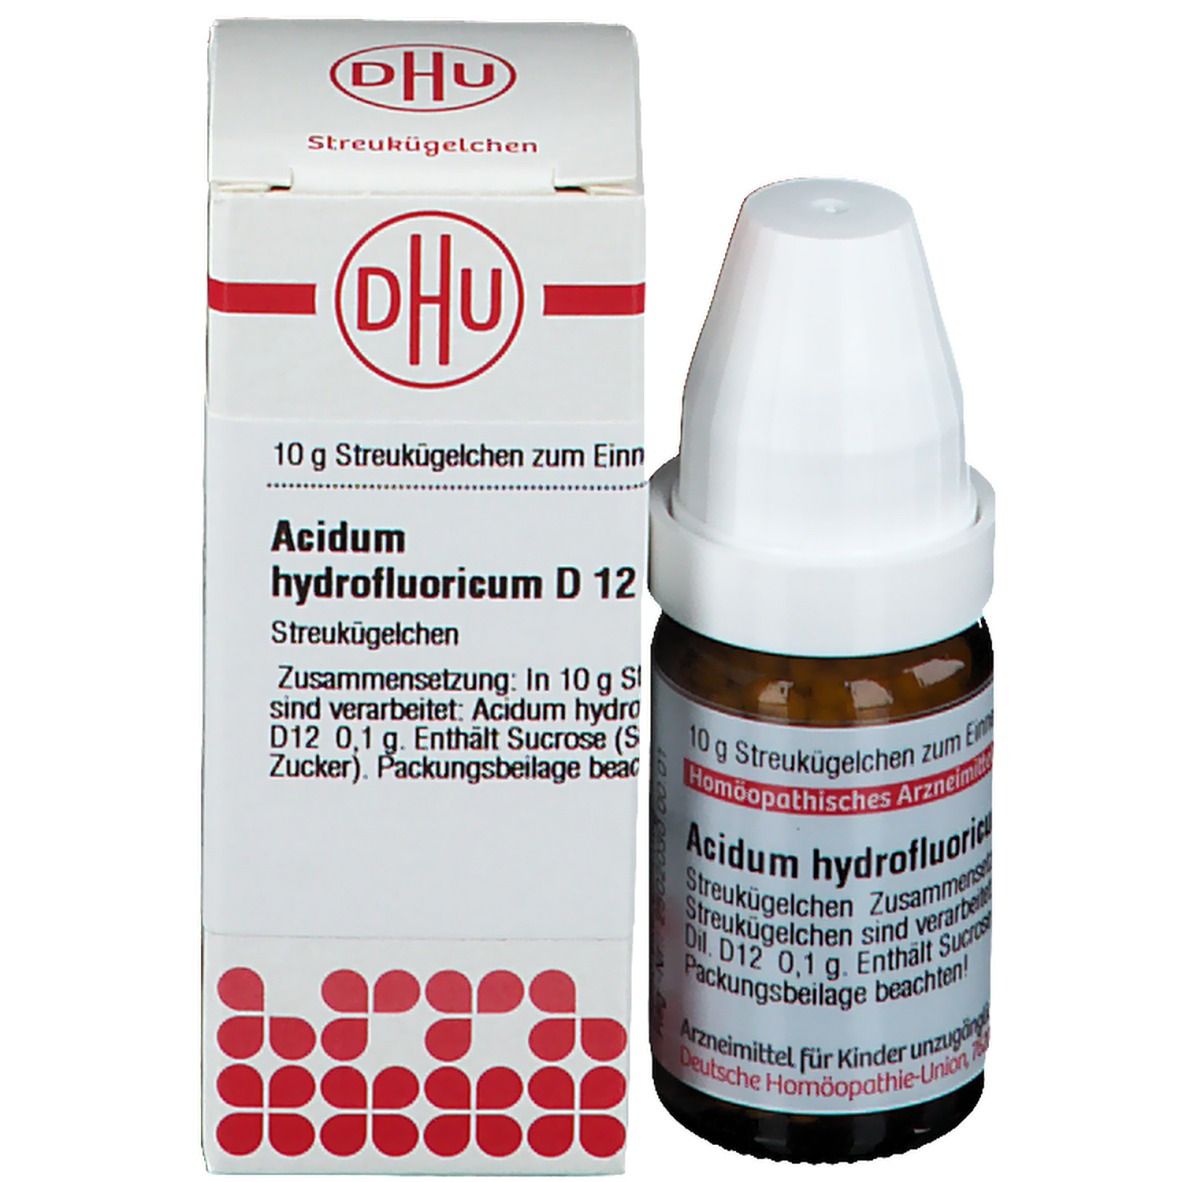 DHU Acidum Hydrofluor D12